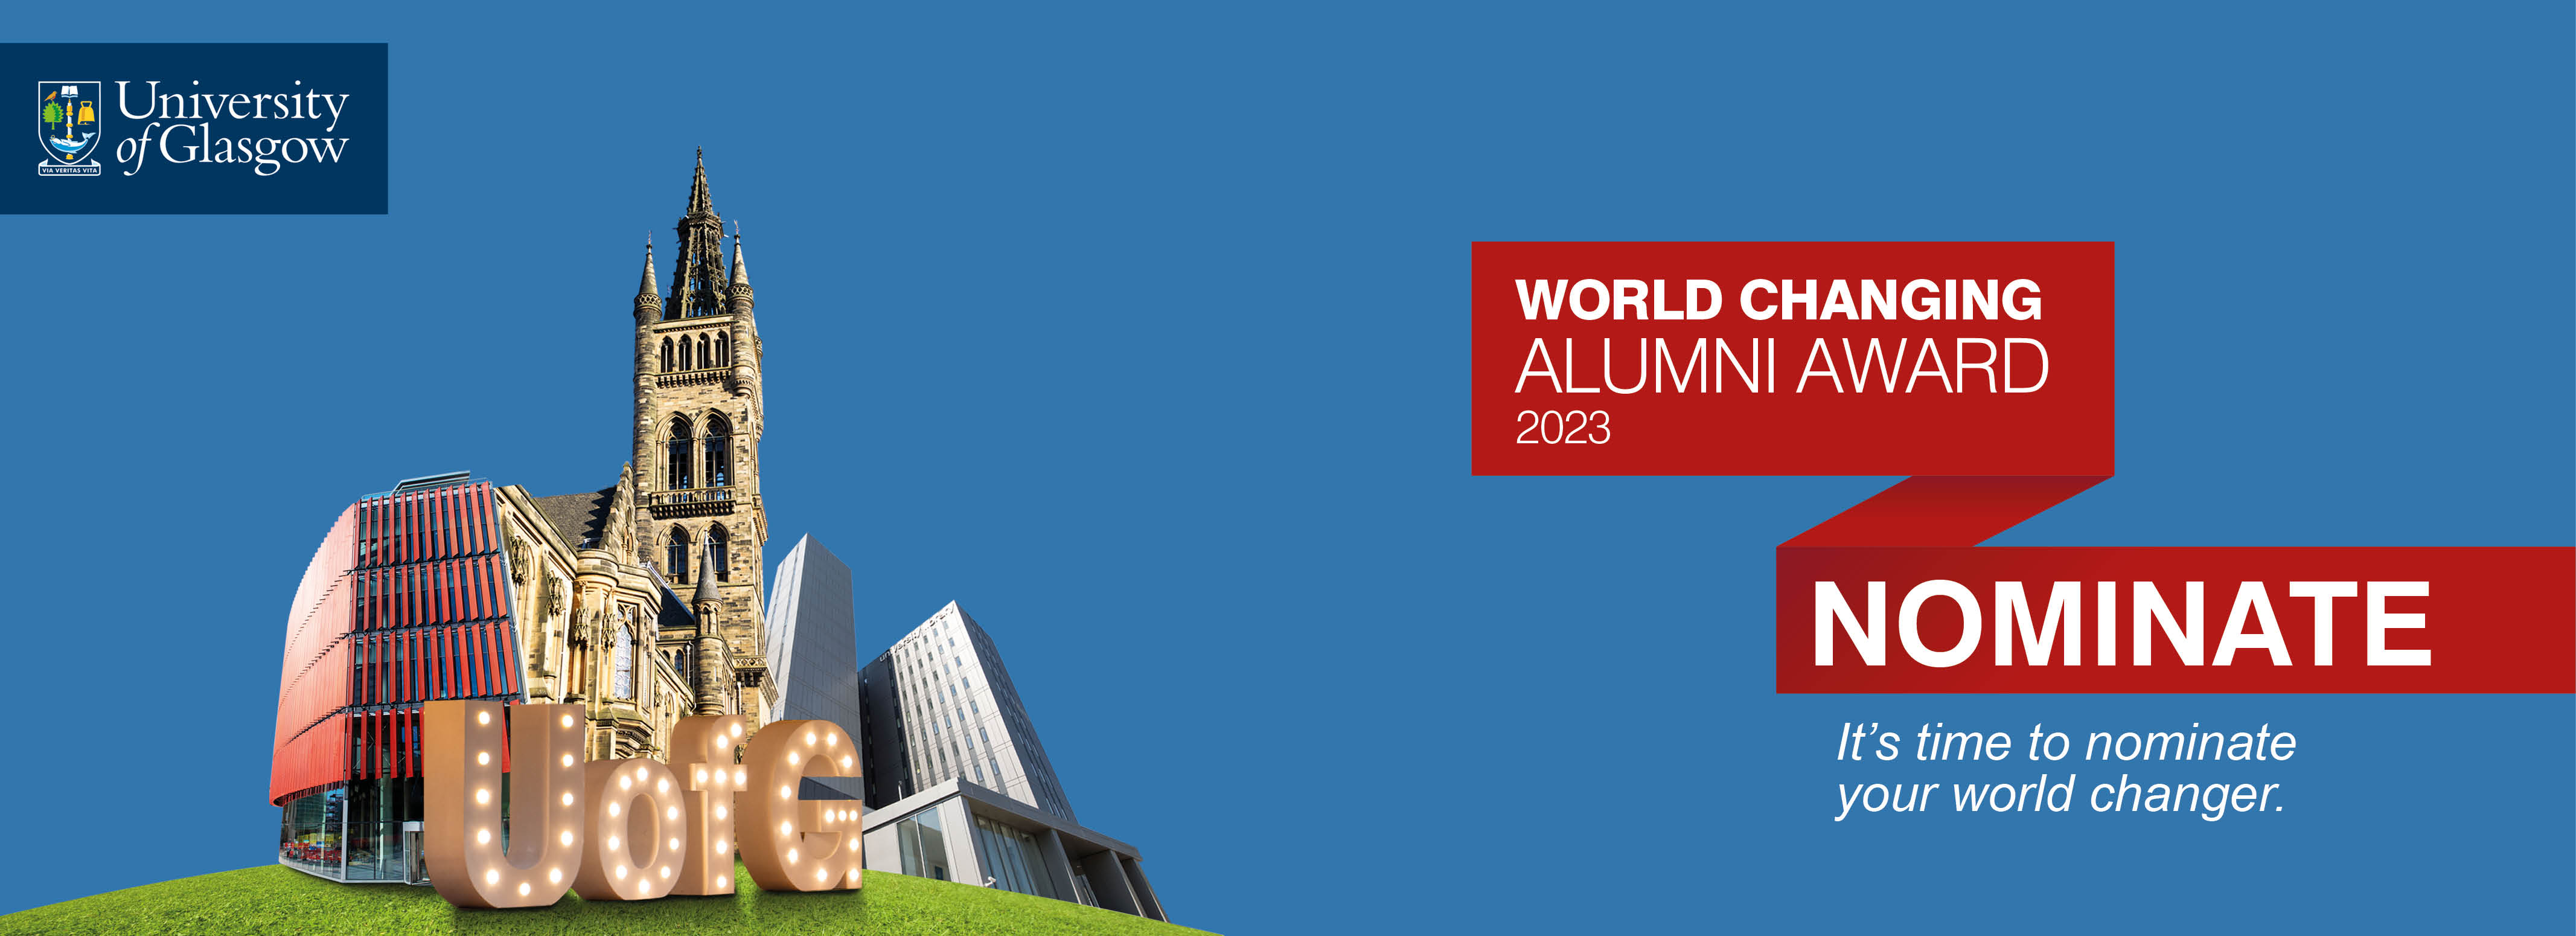 World Changing Alumni Award 2023 Nominate web banner